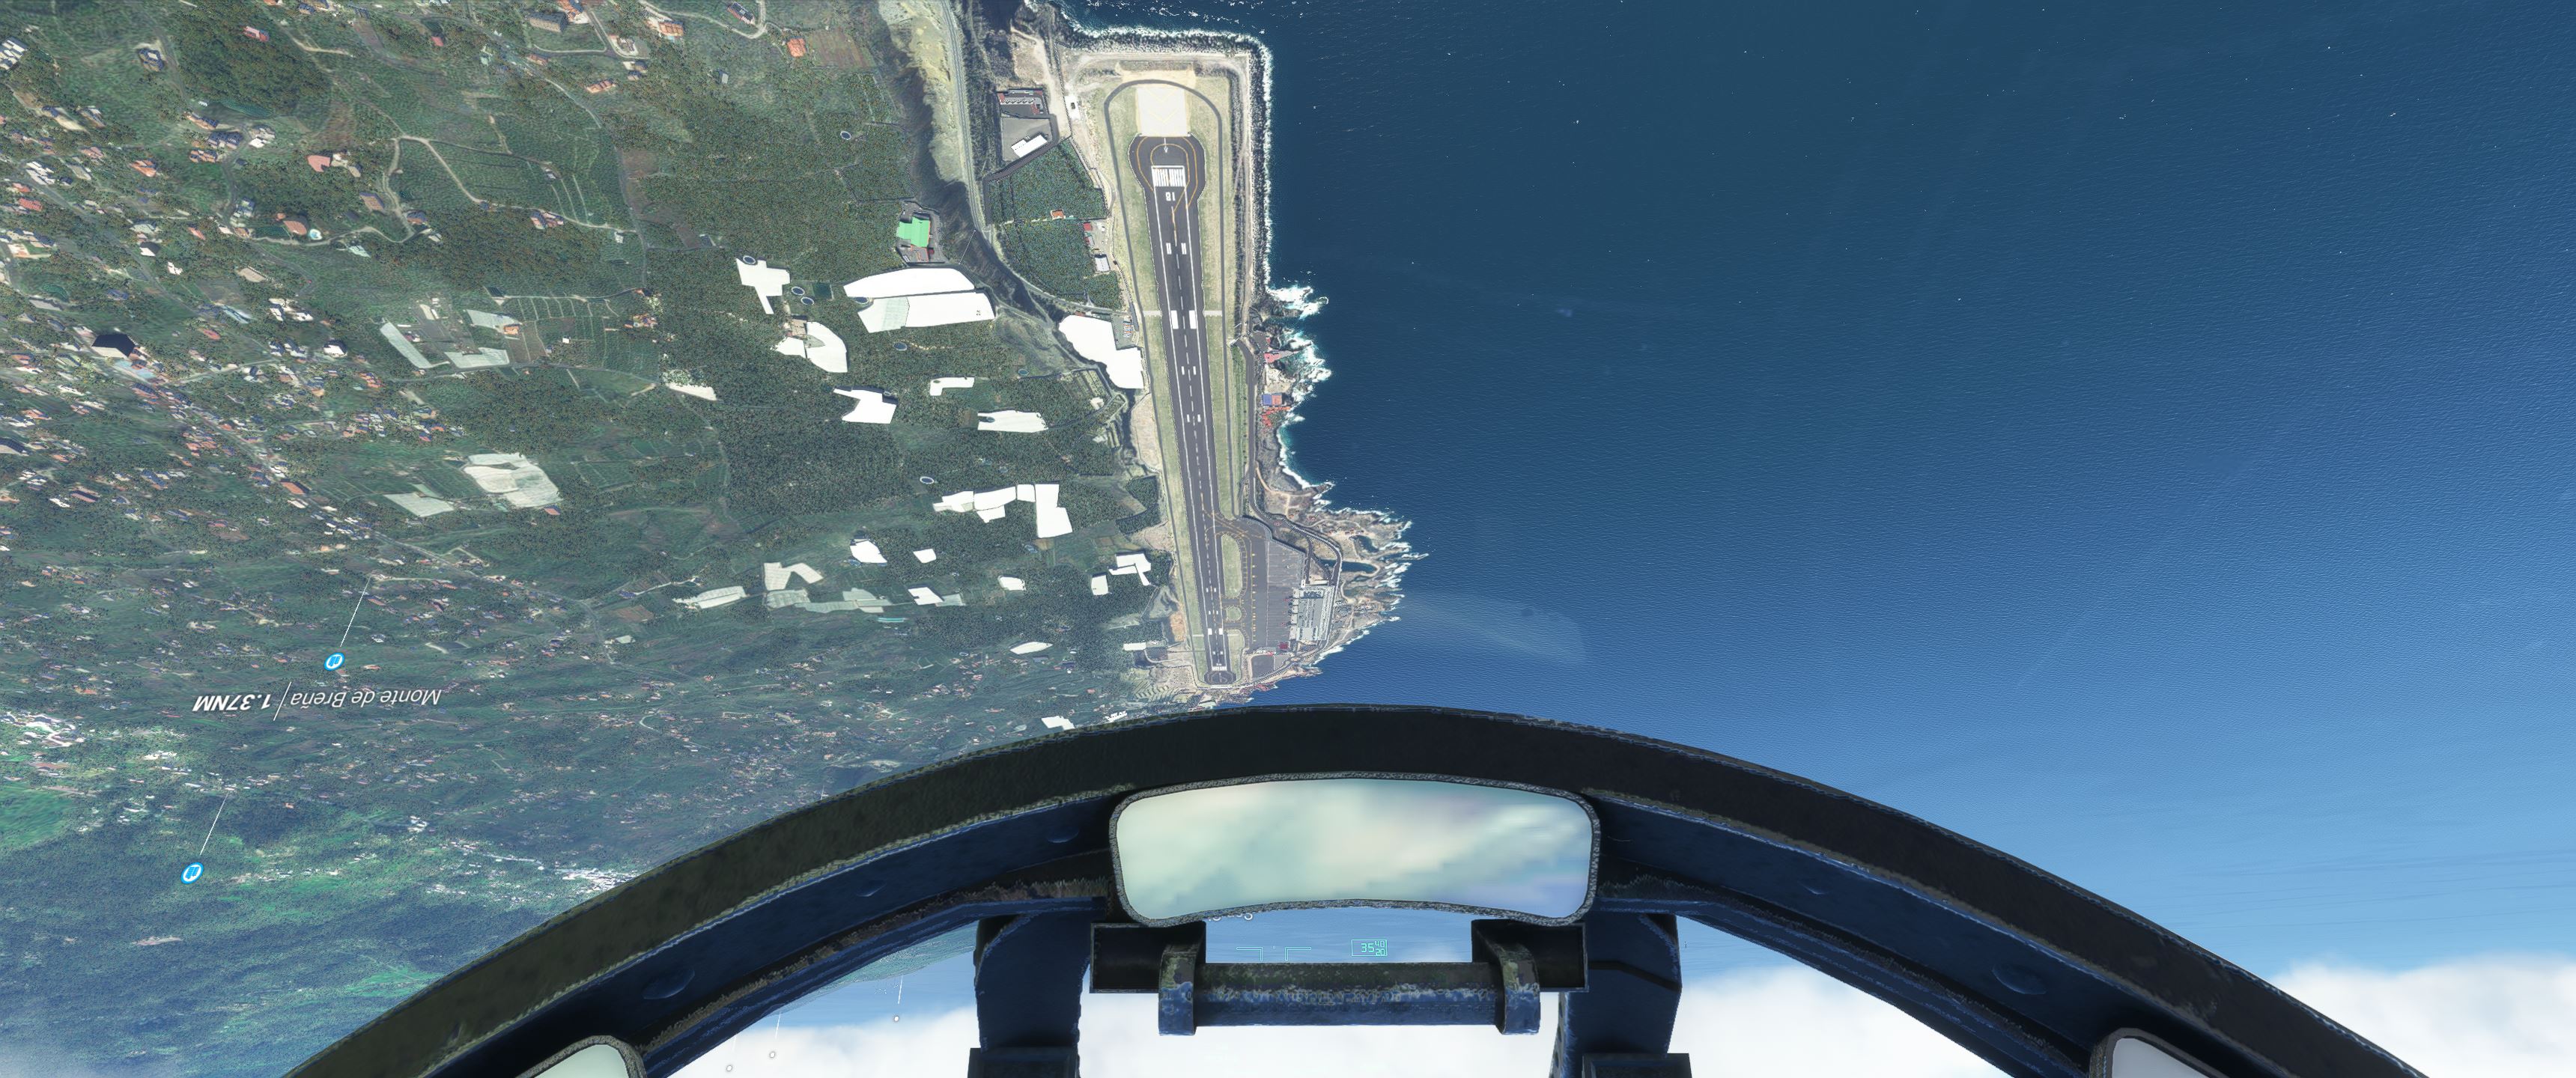 2022-07-01 16_03_06-Microsoft Flight Simulator - 1.26.5.0.jpg